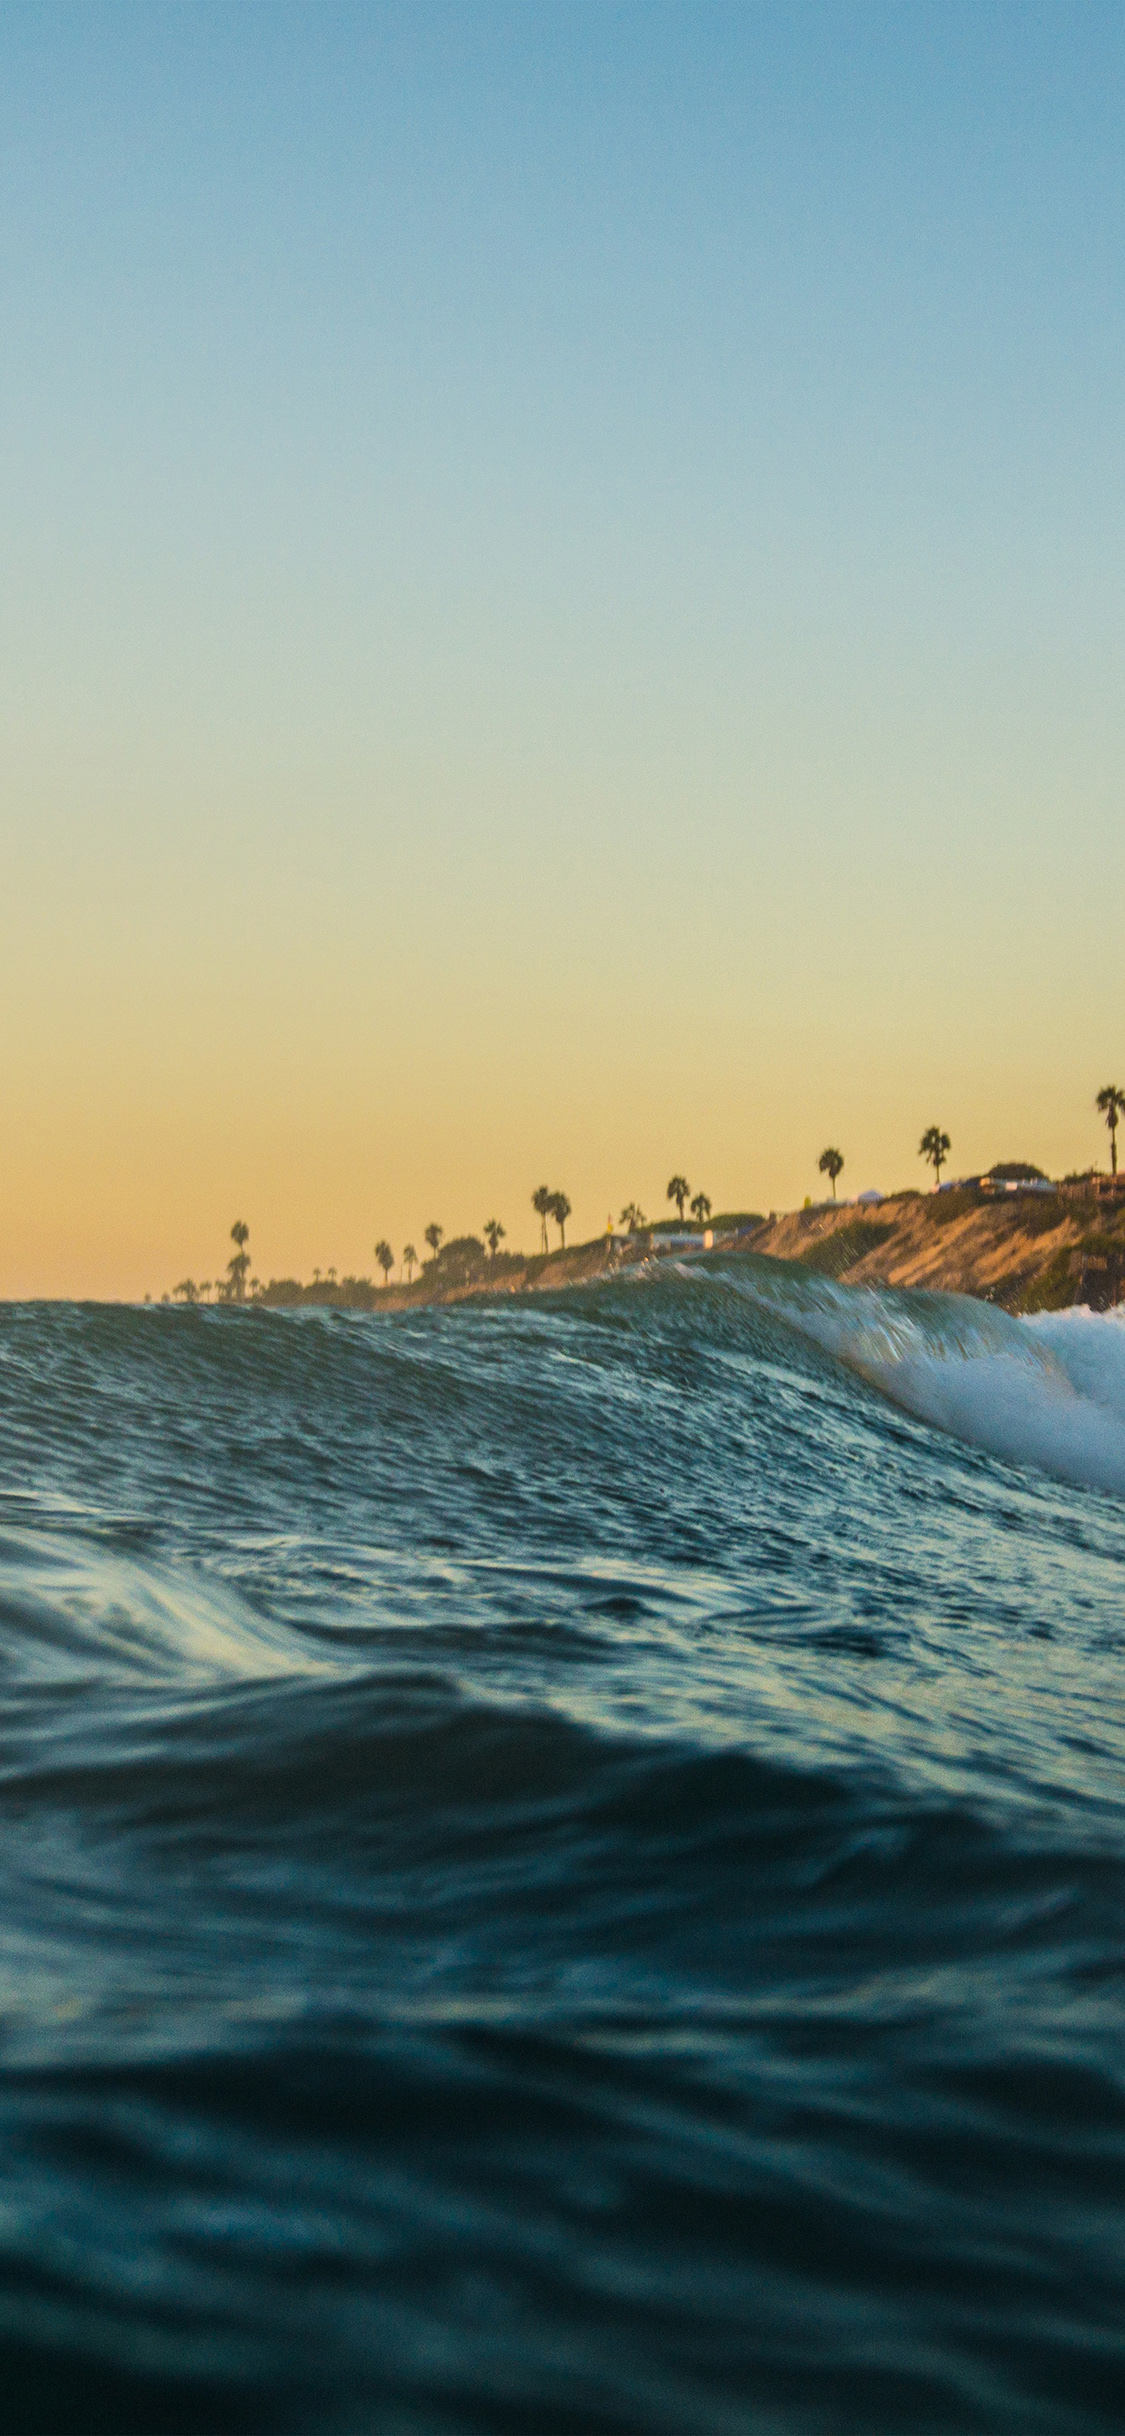 iPhone X wallpaper. sea wave beach